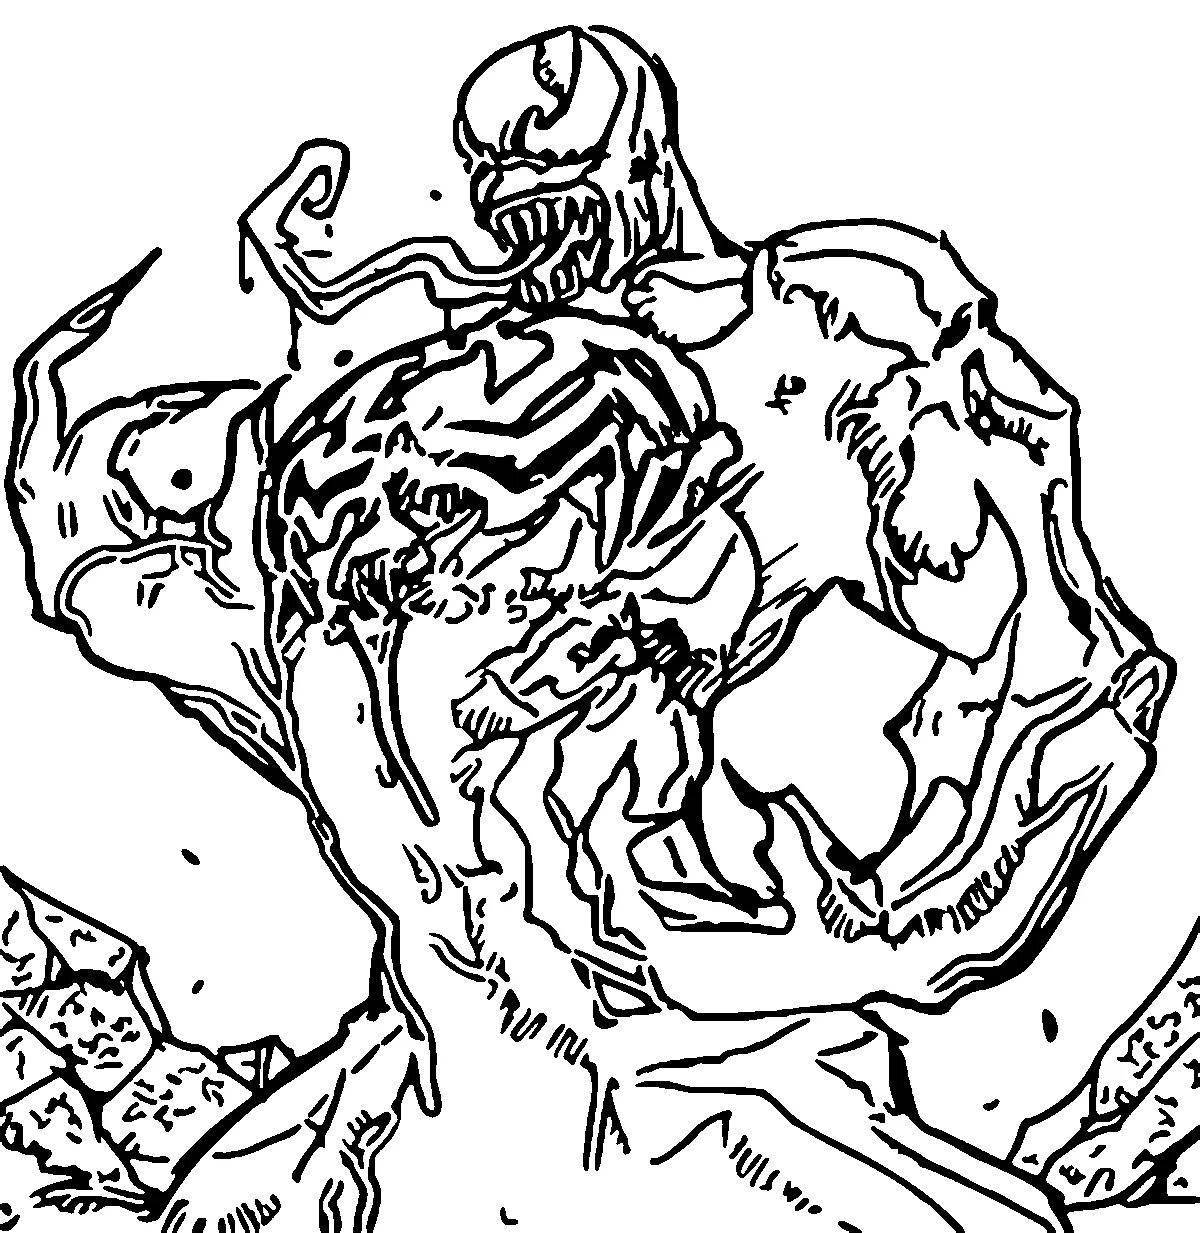 Splendid venom carnage coloring page